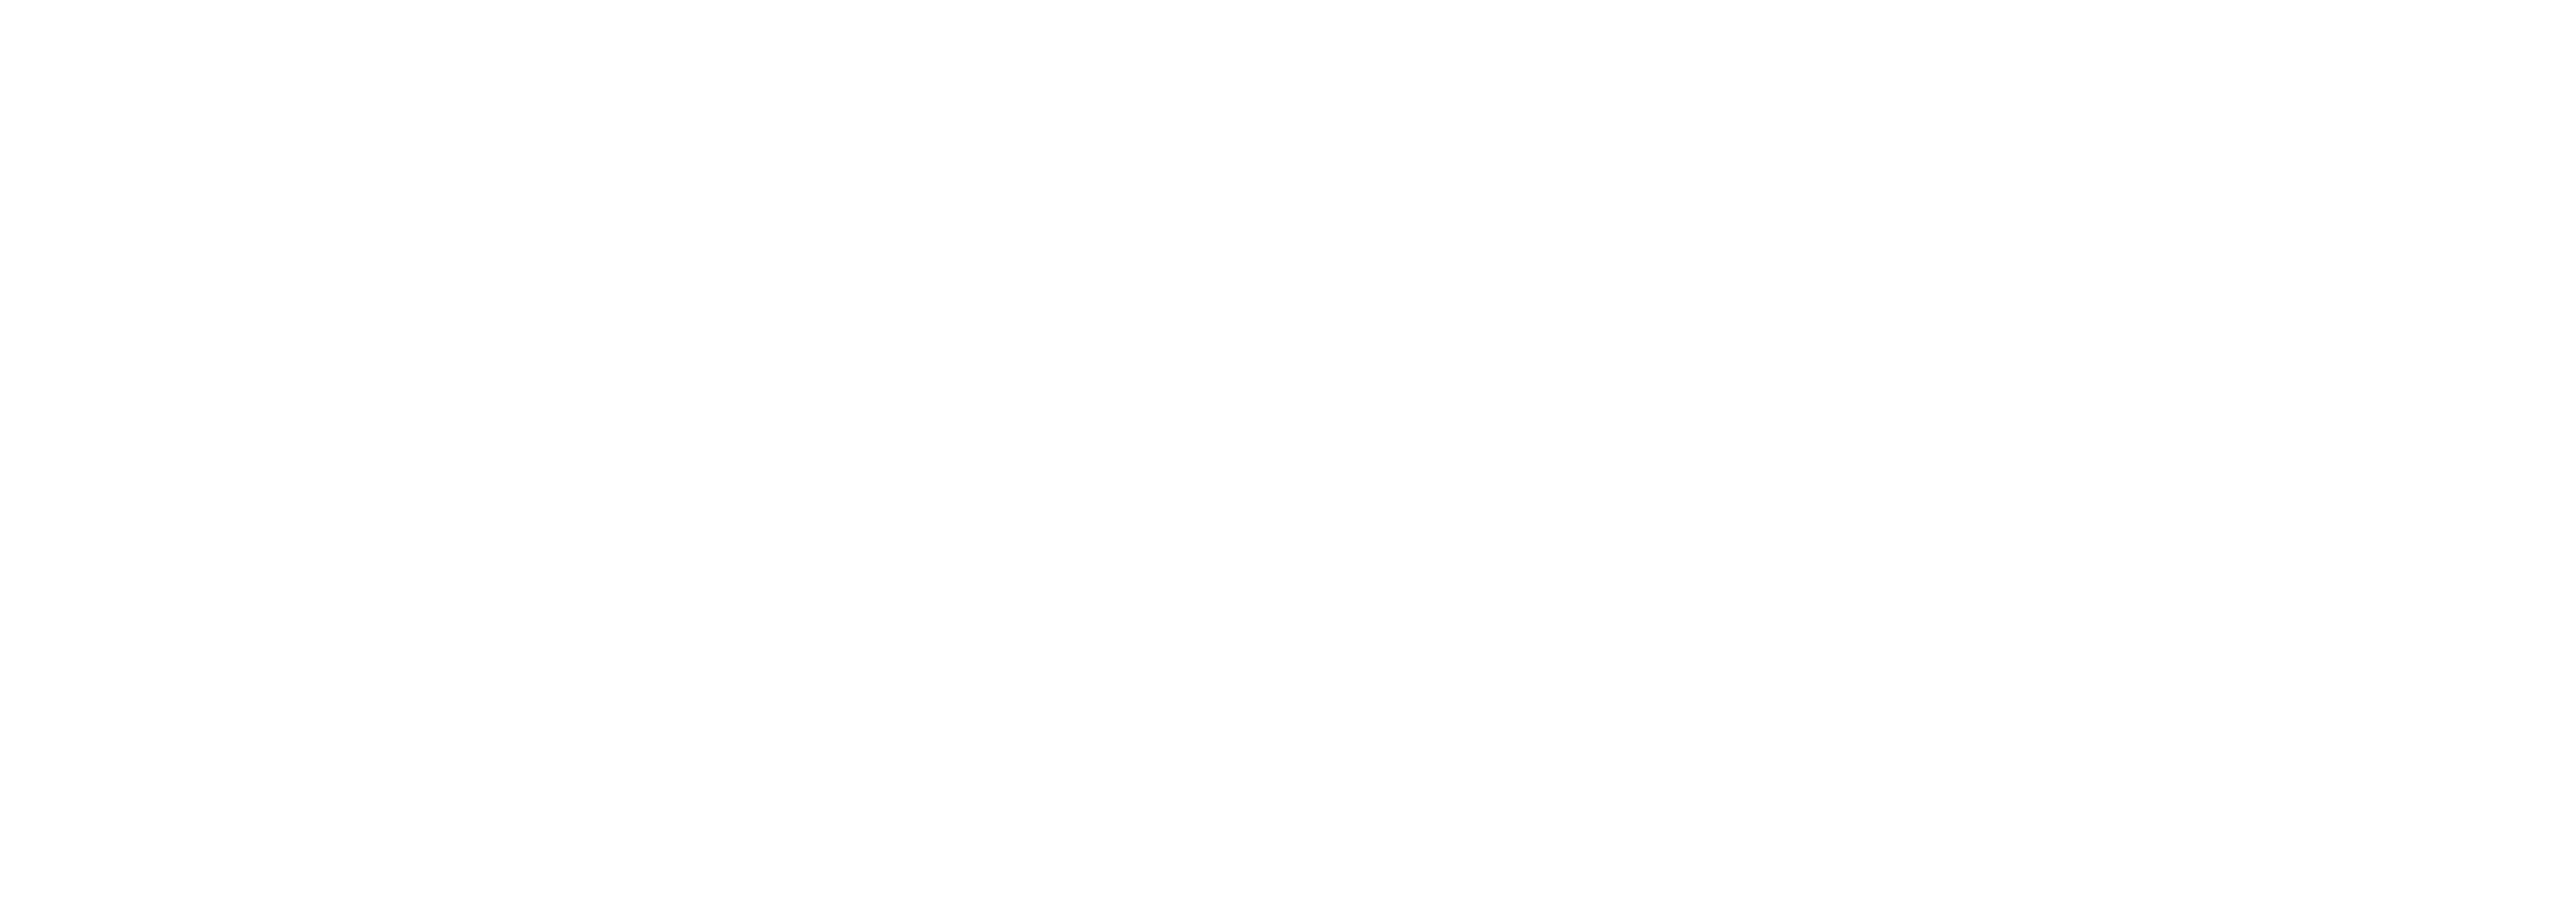 July 2018 - Big Brothers Big Sisters of Halton and Hamilton